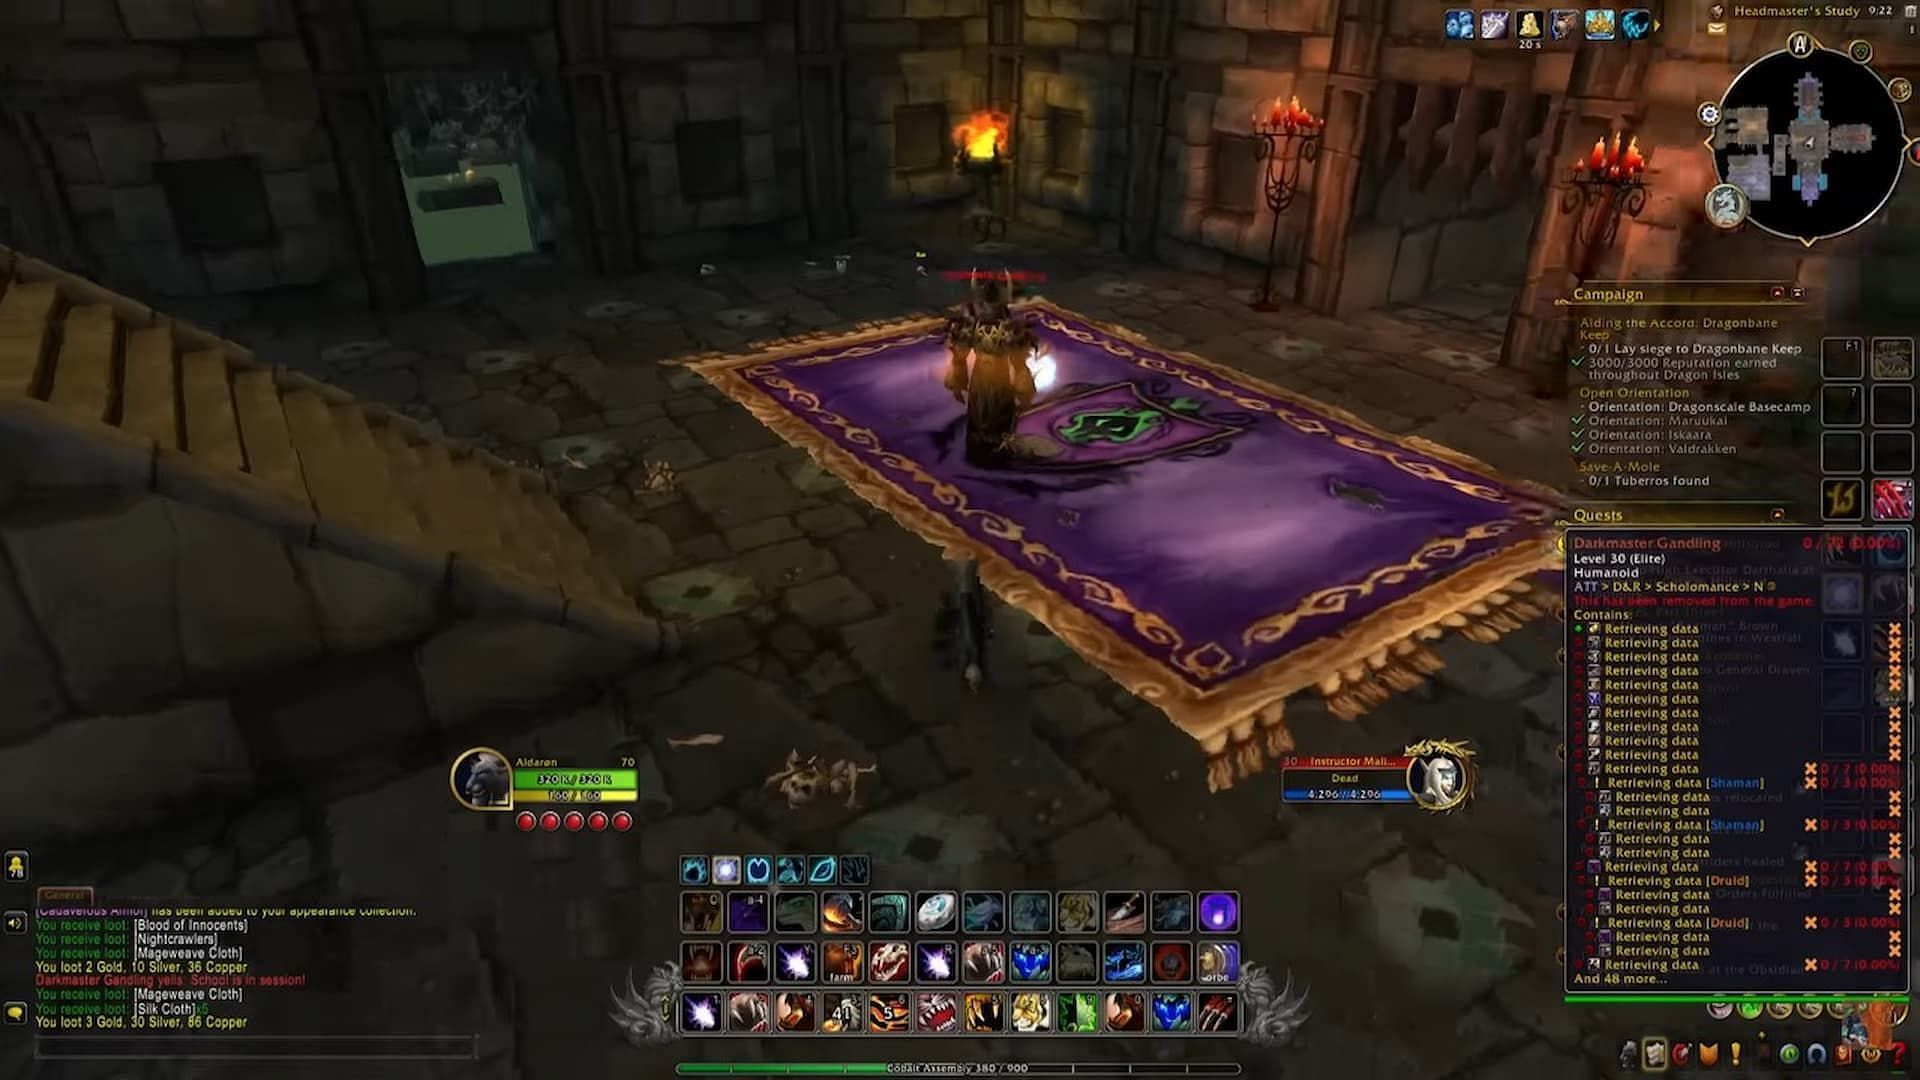 Defeat the Darkmaster Gandling to obtain Scourgestone in World of Warcraft (Image via Blizzard Entertainment)